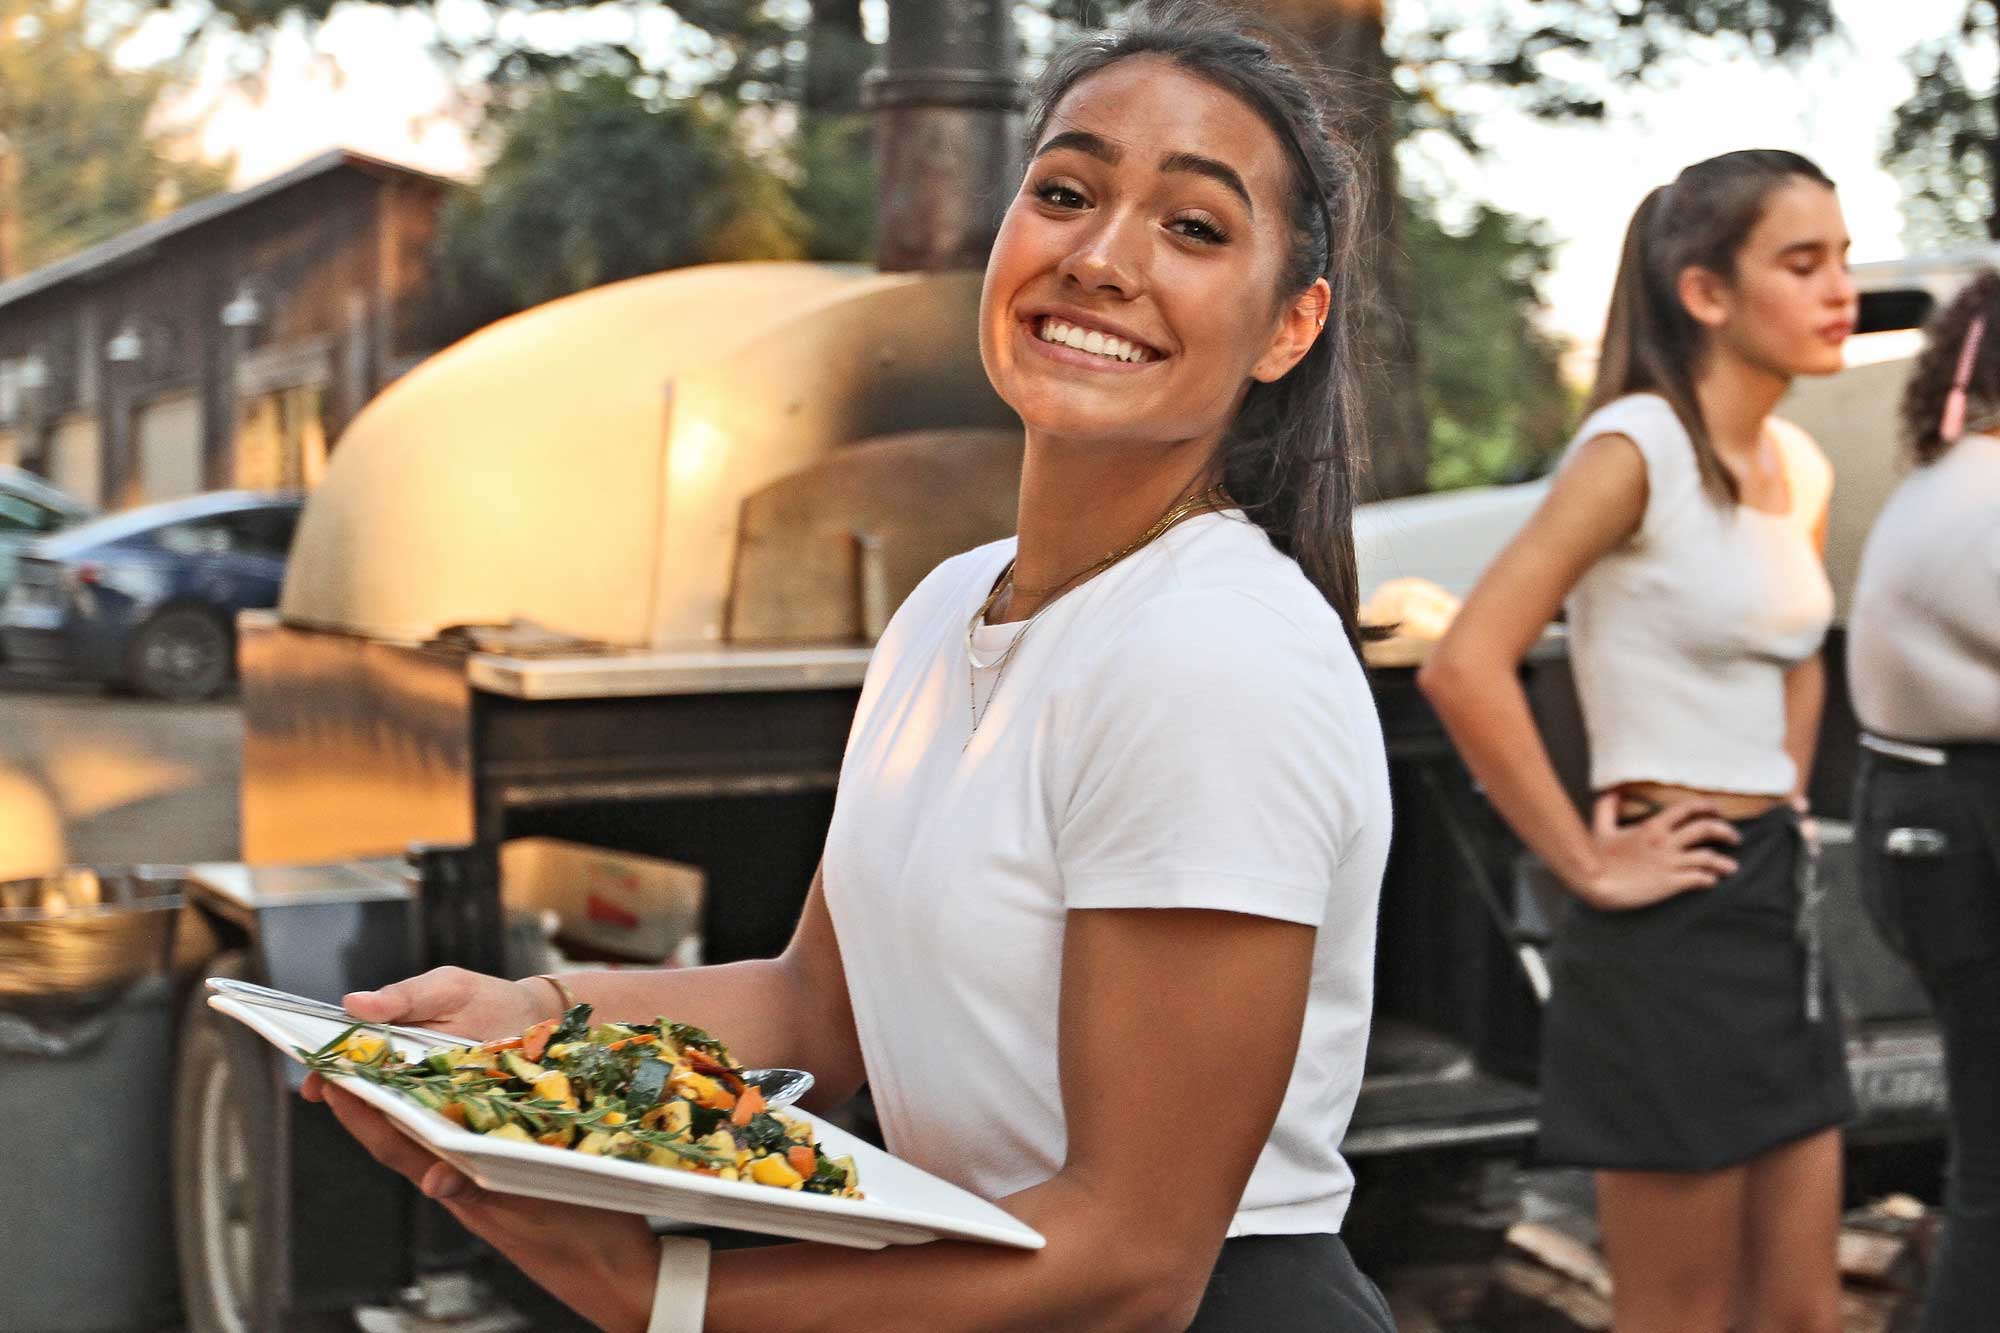 Smiling server carries plate of roast vegetables